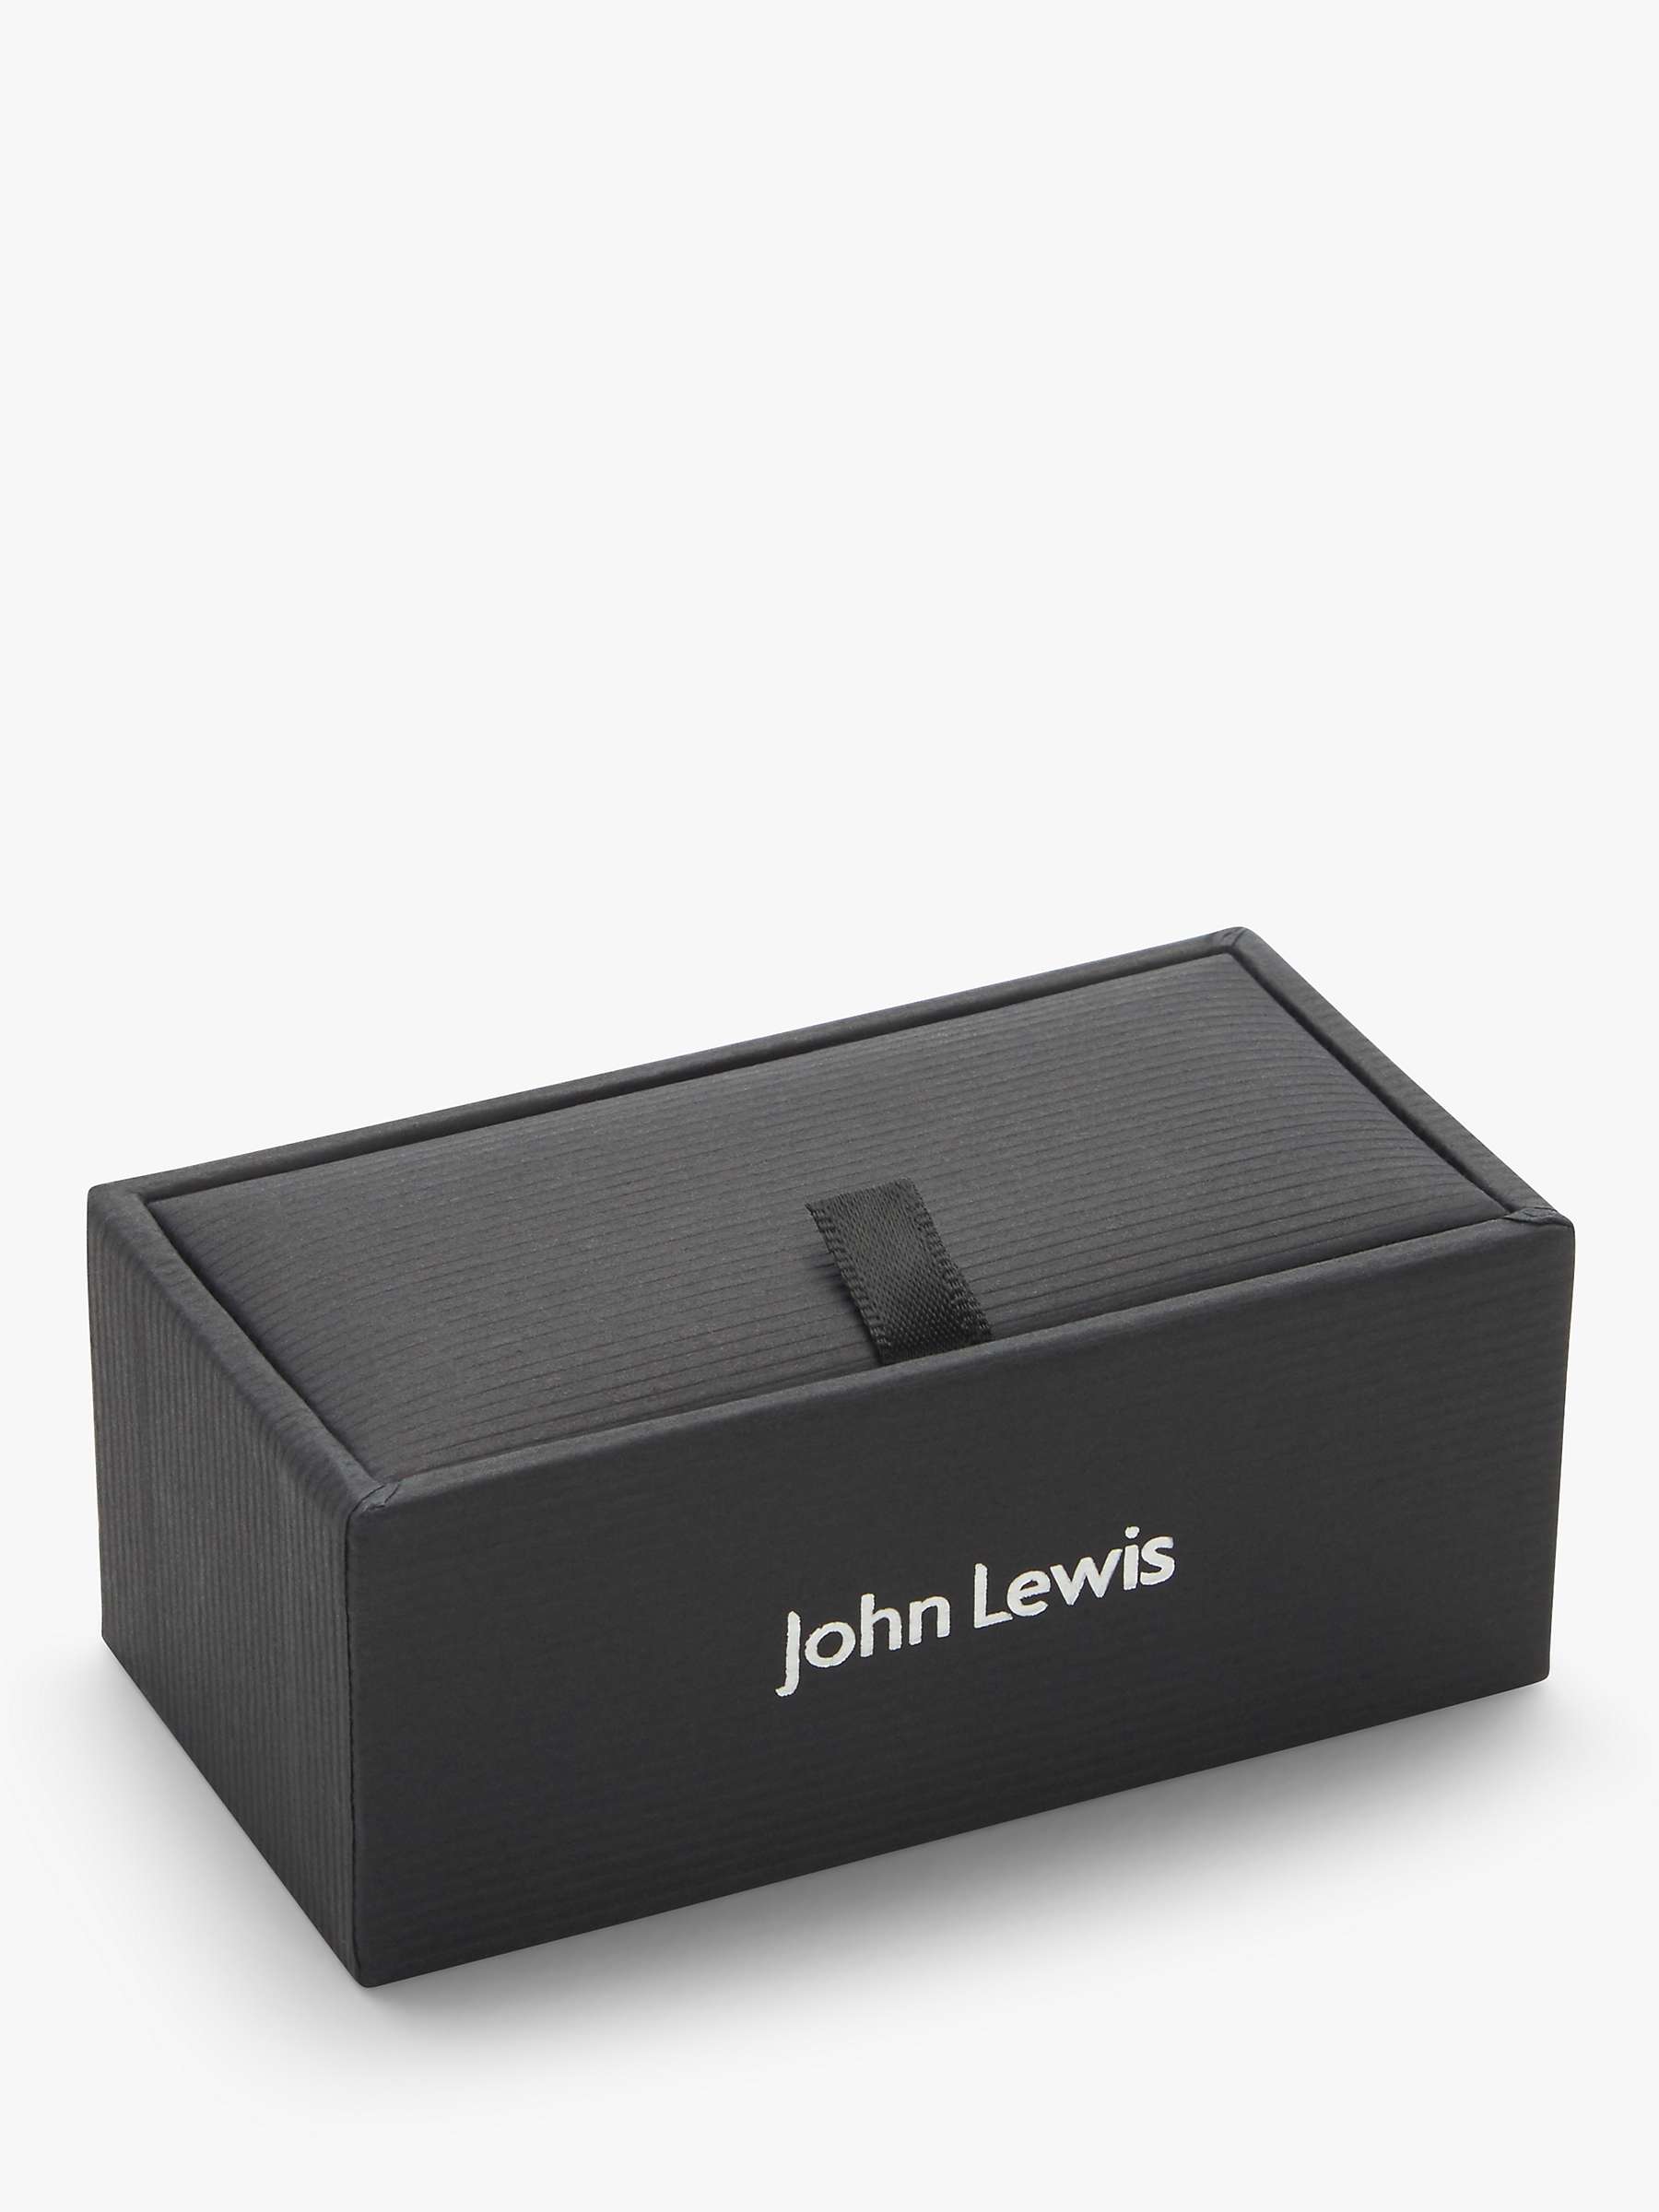 Buy John Lewis Round Goldstone Cufflinks, Blue Online at johnlewis.com